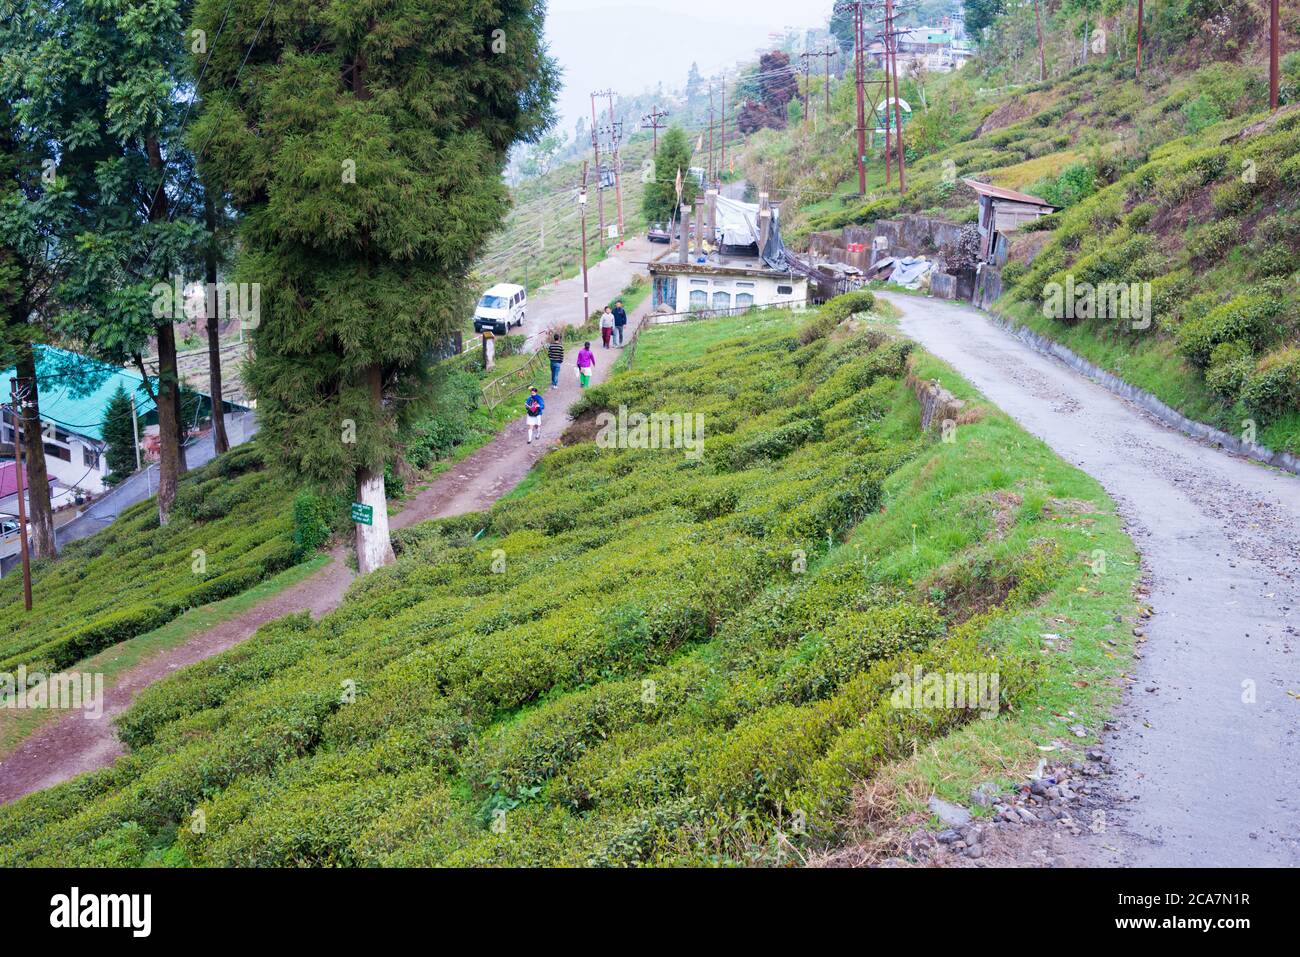 Tea Plantations at Happy Valley Tea Estate in Darjeeling, West Bengal, India. Darjeeling teas are regarded as one of the best world wide. Stock Photo